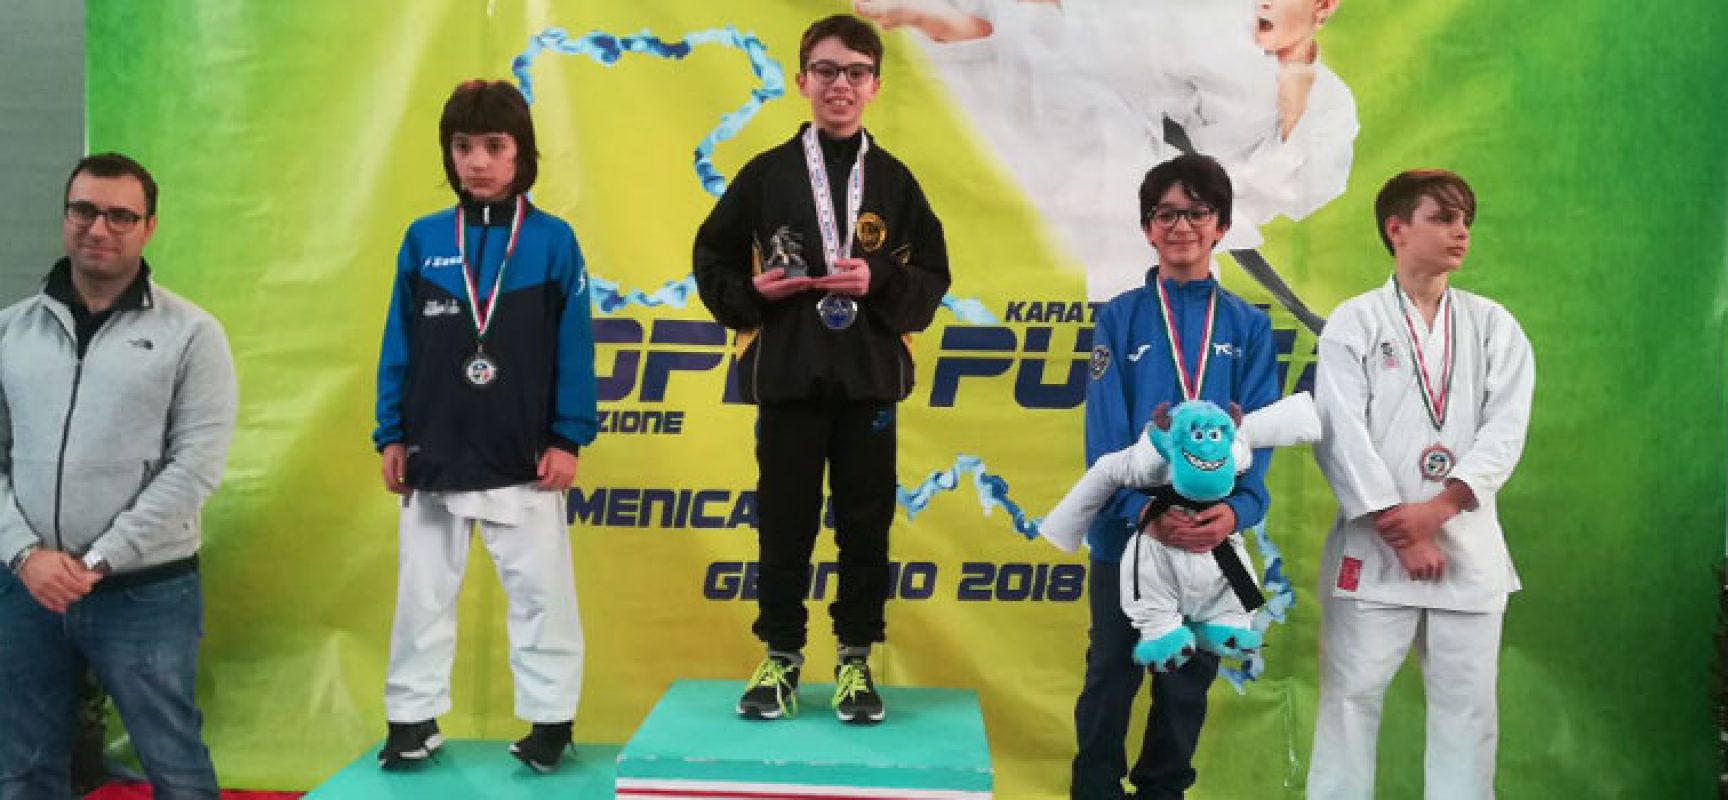 Coppa Puglia Karate Kumitè Csen, doppietta per i fratelli Papagni